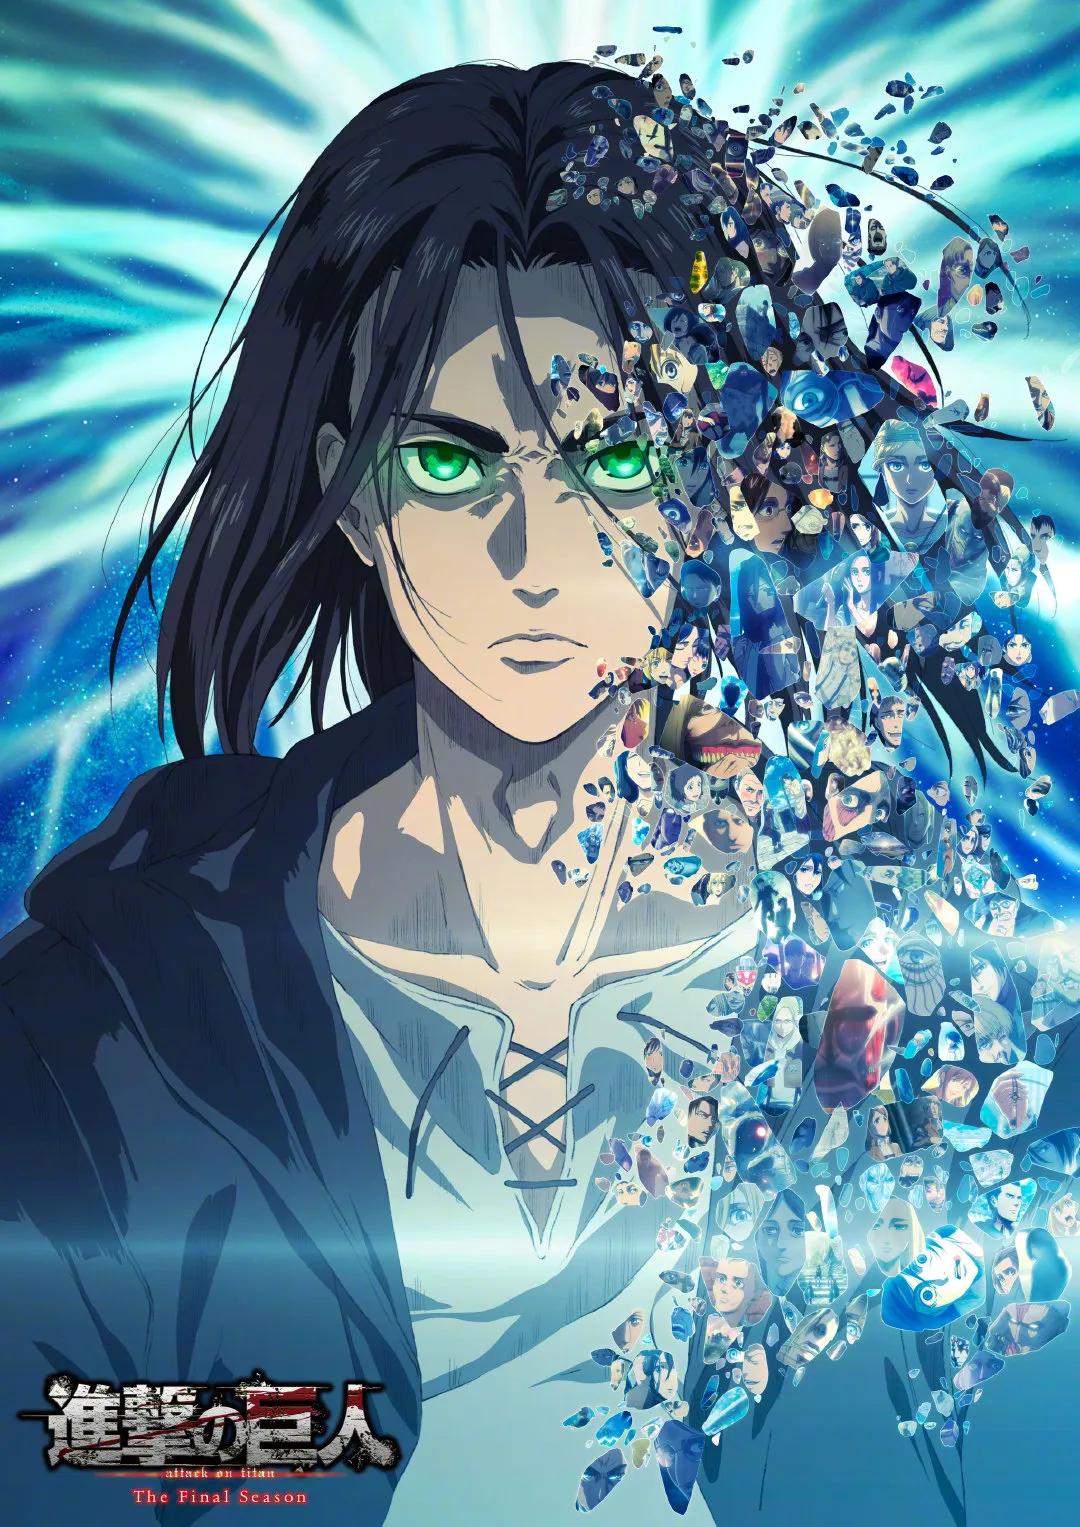 Top 10 Anime of the Week #6 - Spring 2023 (Anime Corner) : r/anime